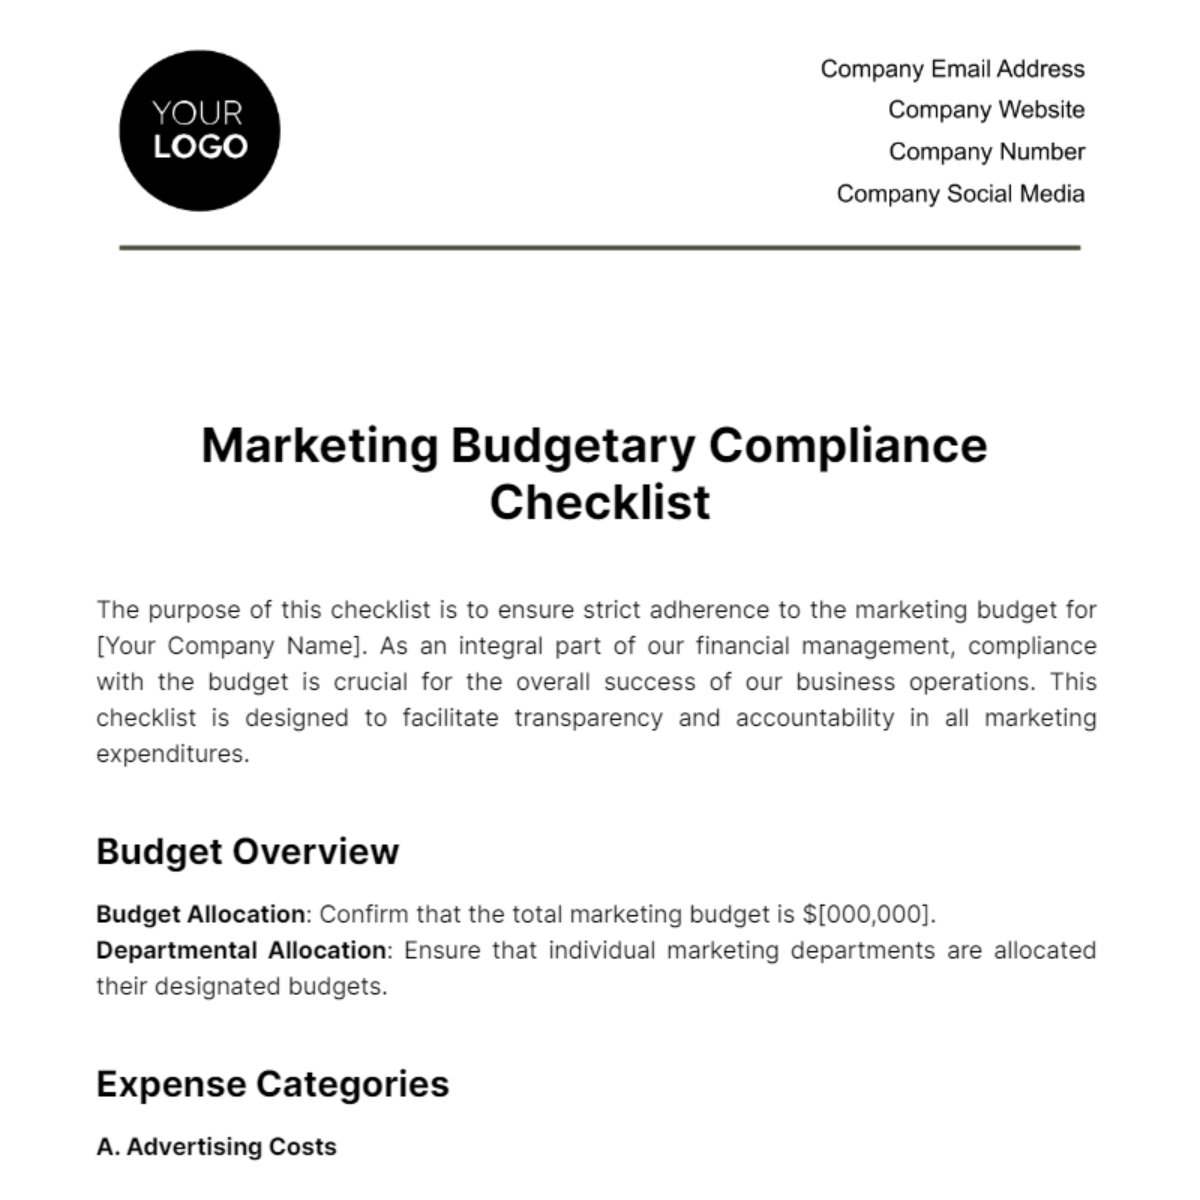 Marketing Budgetary Compliance Checklist Template